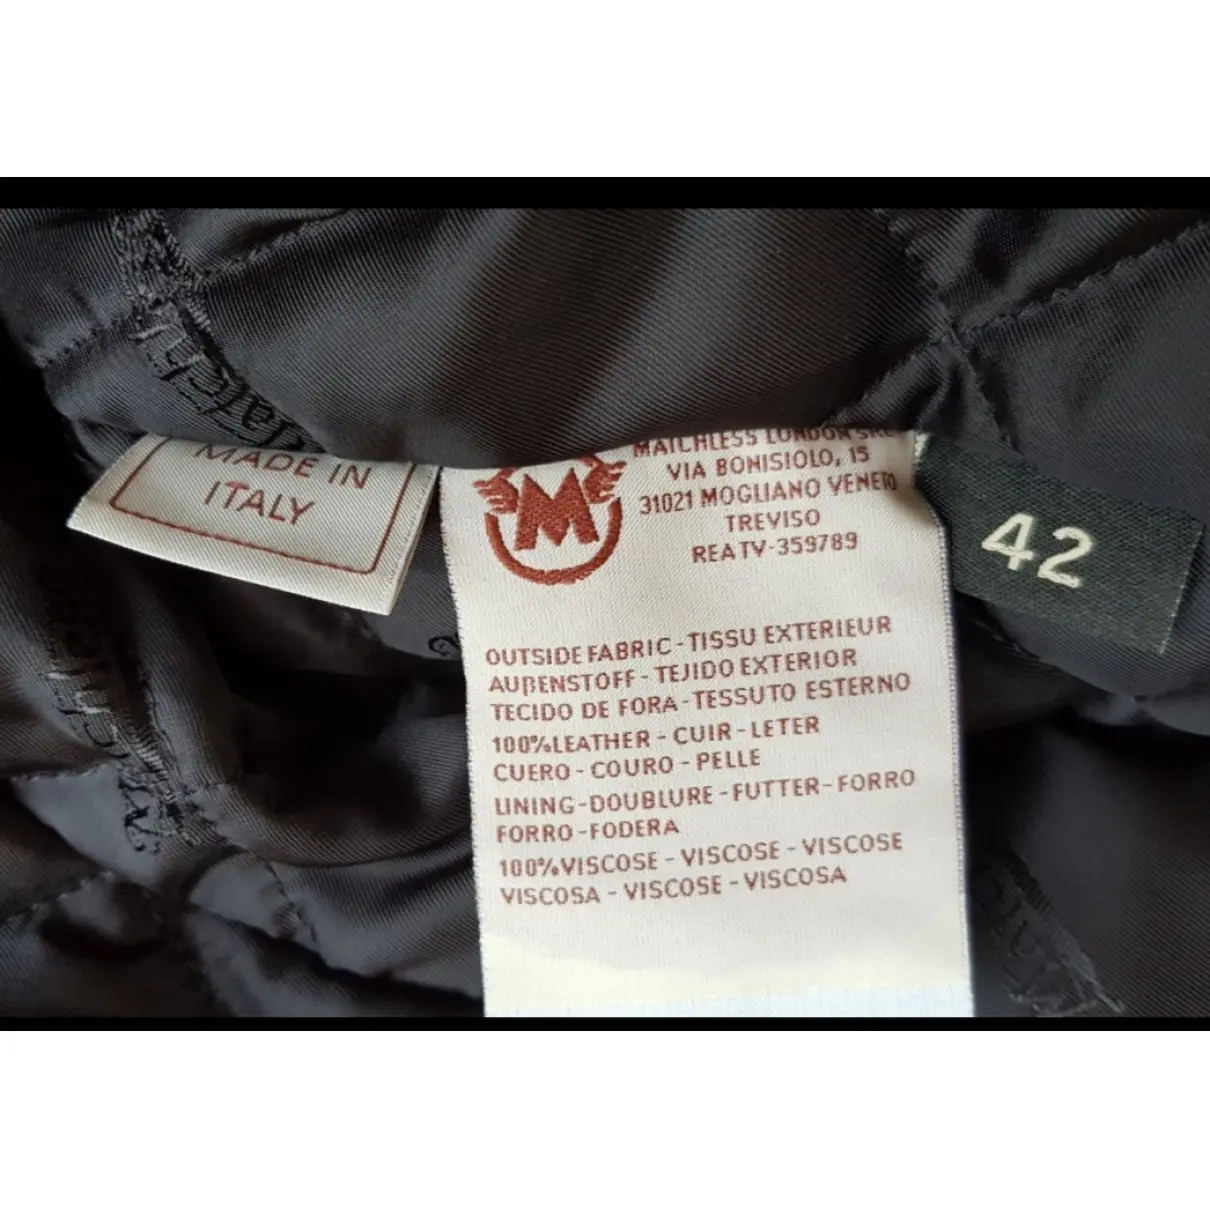 Buy Matchless Leather biker jacket online